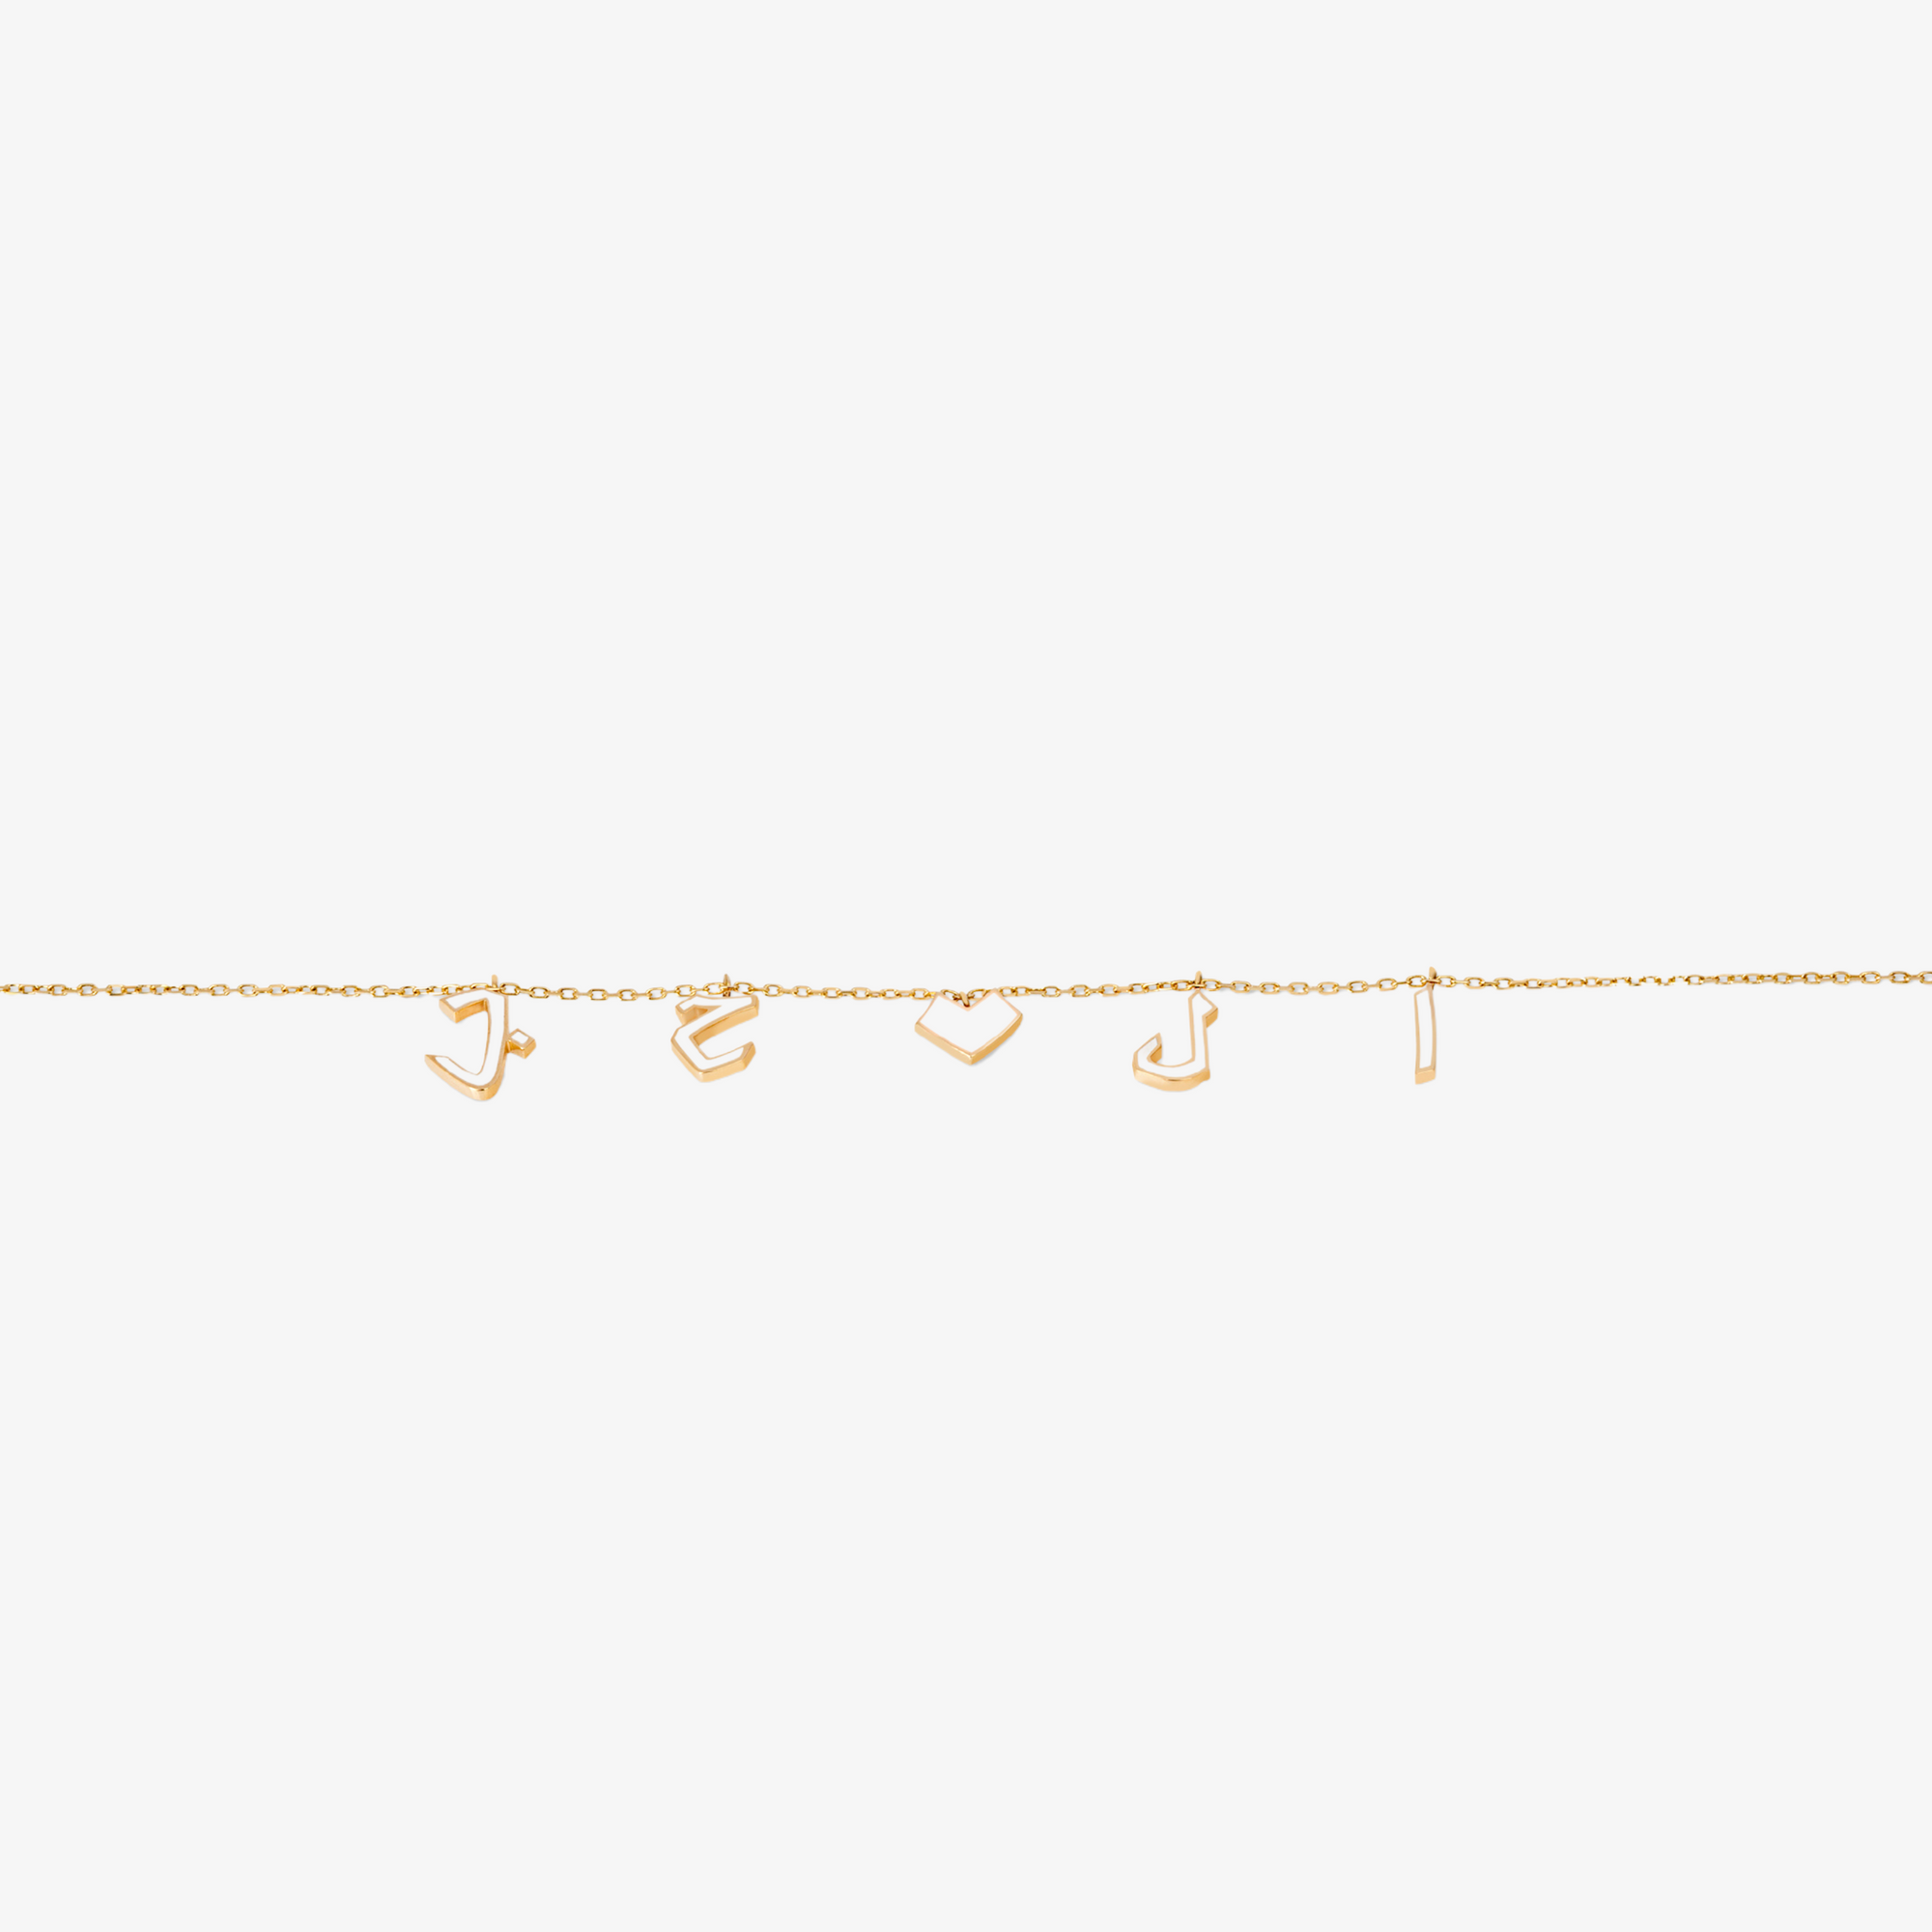 OULA - Gold & Enamel "The Love" Bracelet with Heart Charm